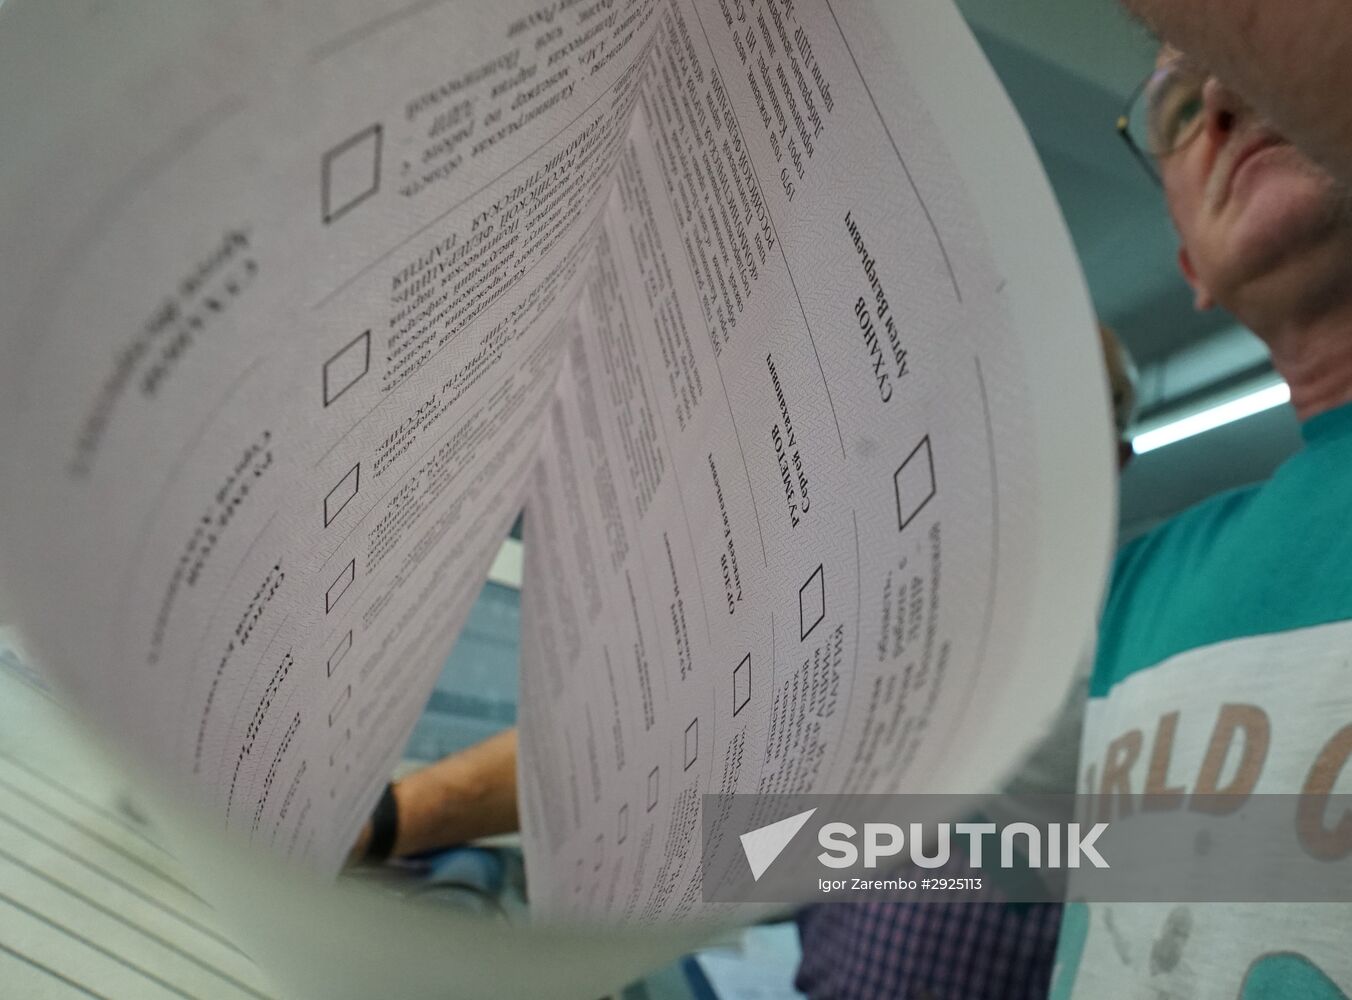 Printing ballot papers in Kaliningrad